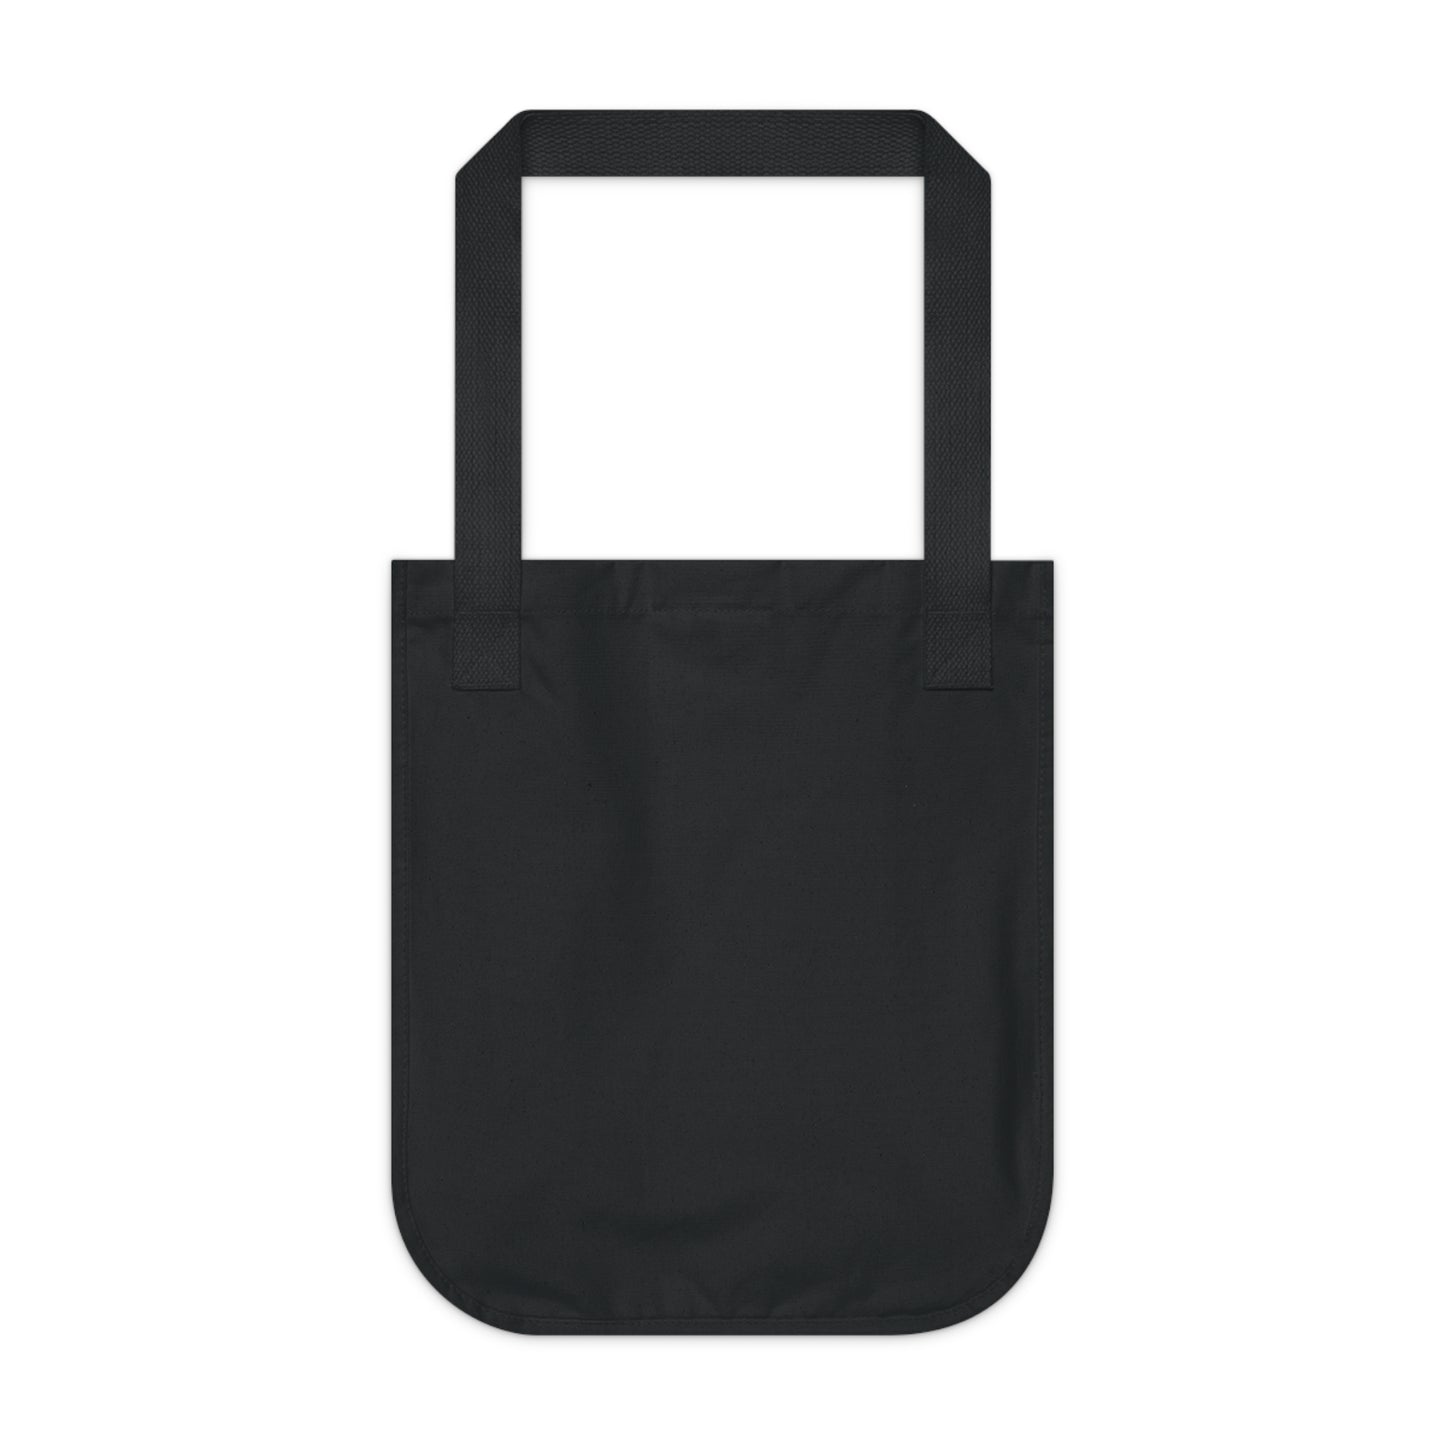 Eco-Friendly - Organic Canvas Tote Bag - Medium heavy fabric 9 oz - Authetic Brand GR@ON